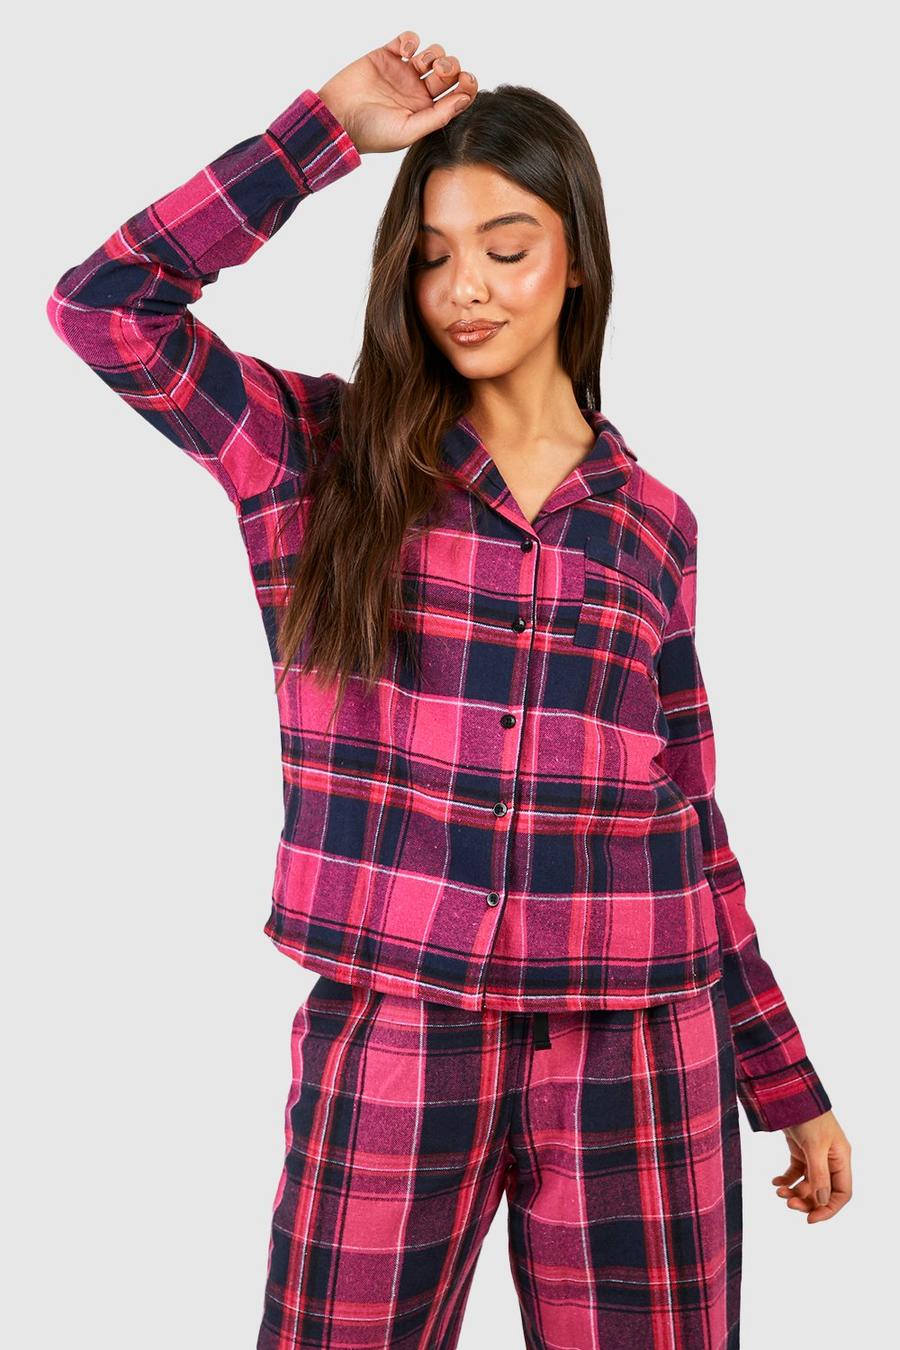 Red Plaid Christmas Pajamas Jammies, Matching Family Pajamas Sets Men Women  Kids and Baby Holiday Pjs Loungewear Nightgown (Q Style, Women/XL)